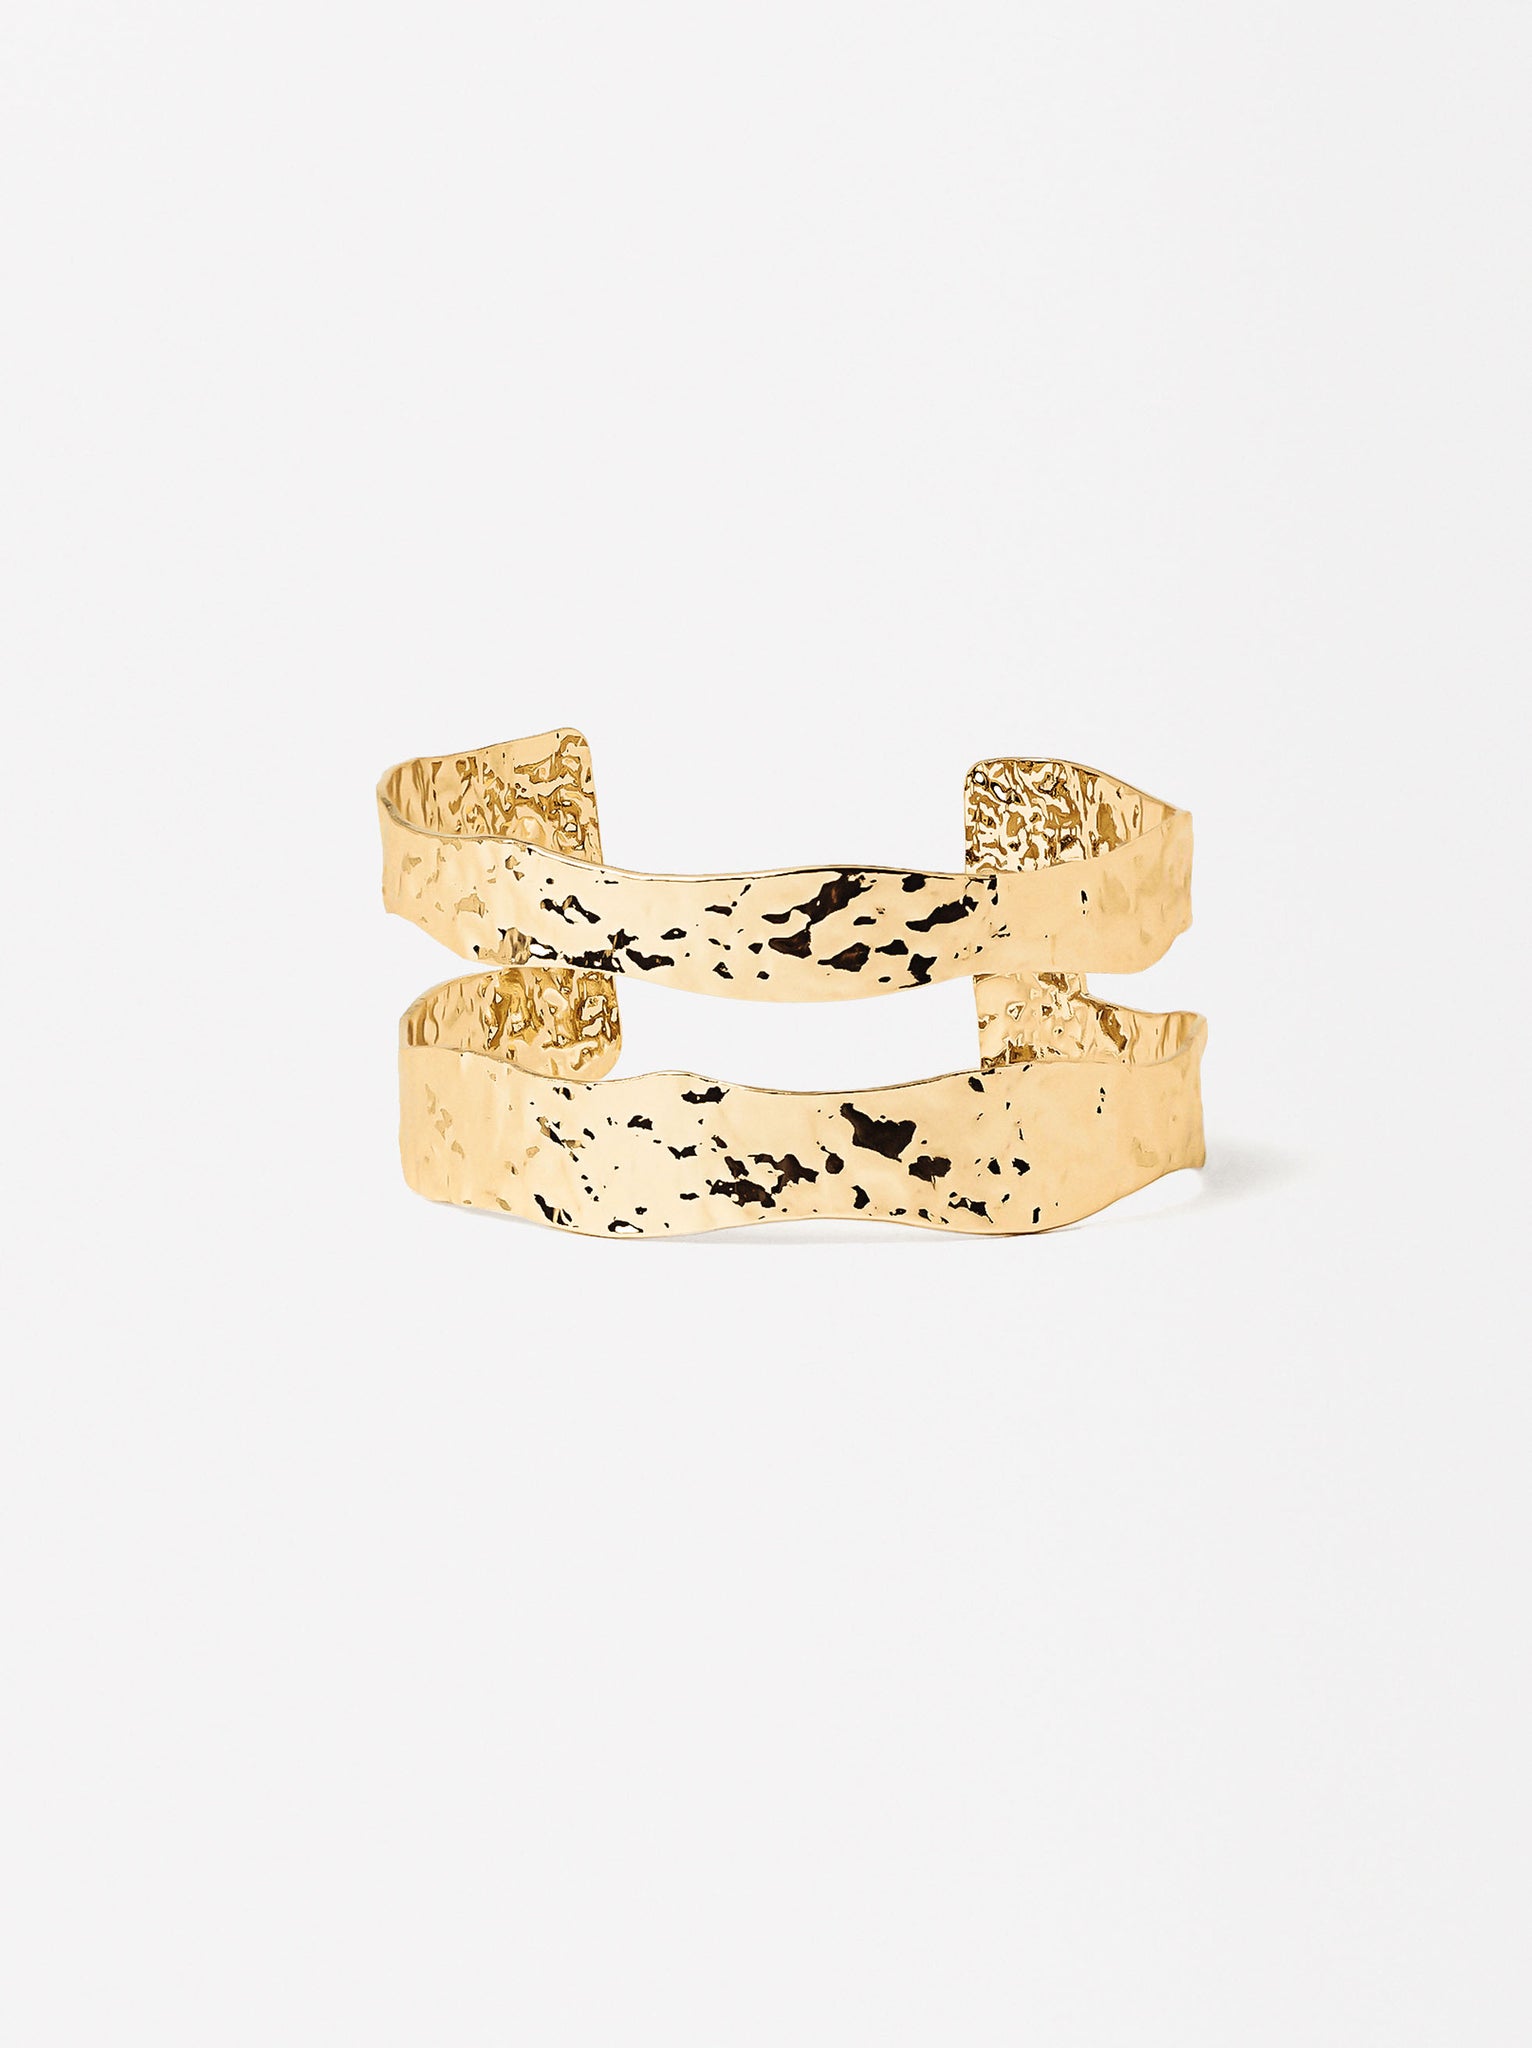 Textured Gold Bracelet